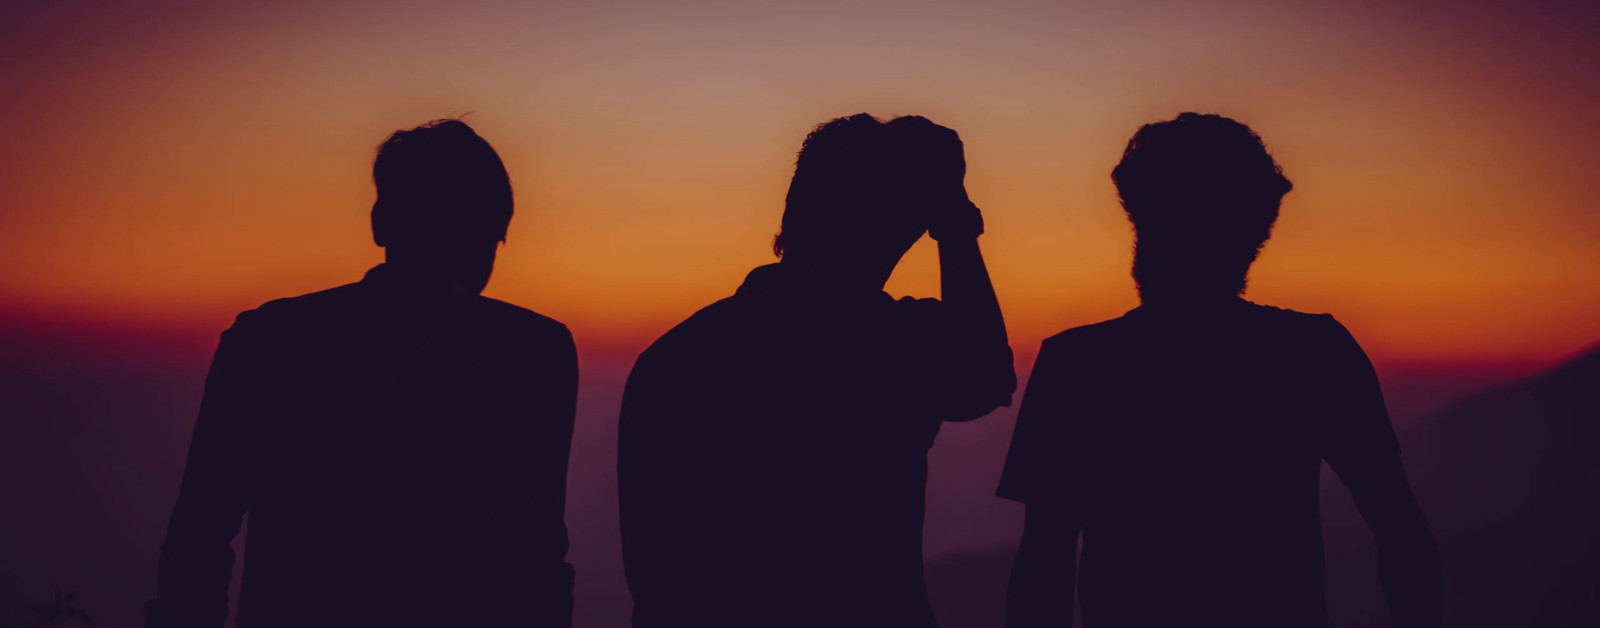 silhouette of 3 men watching sunset